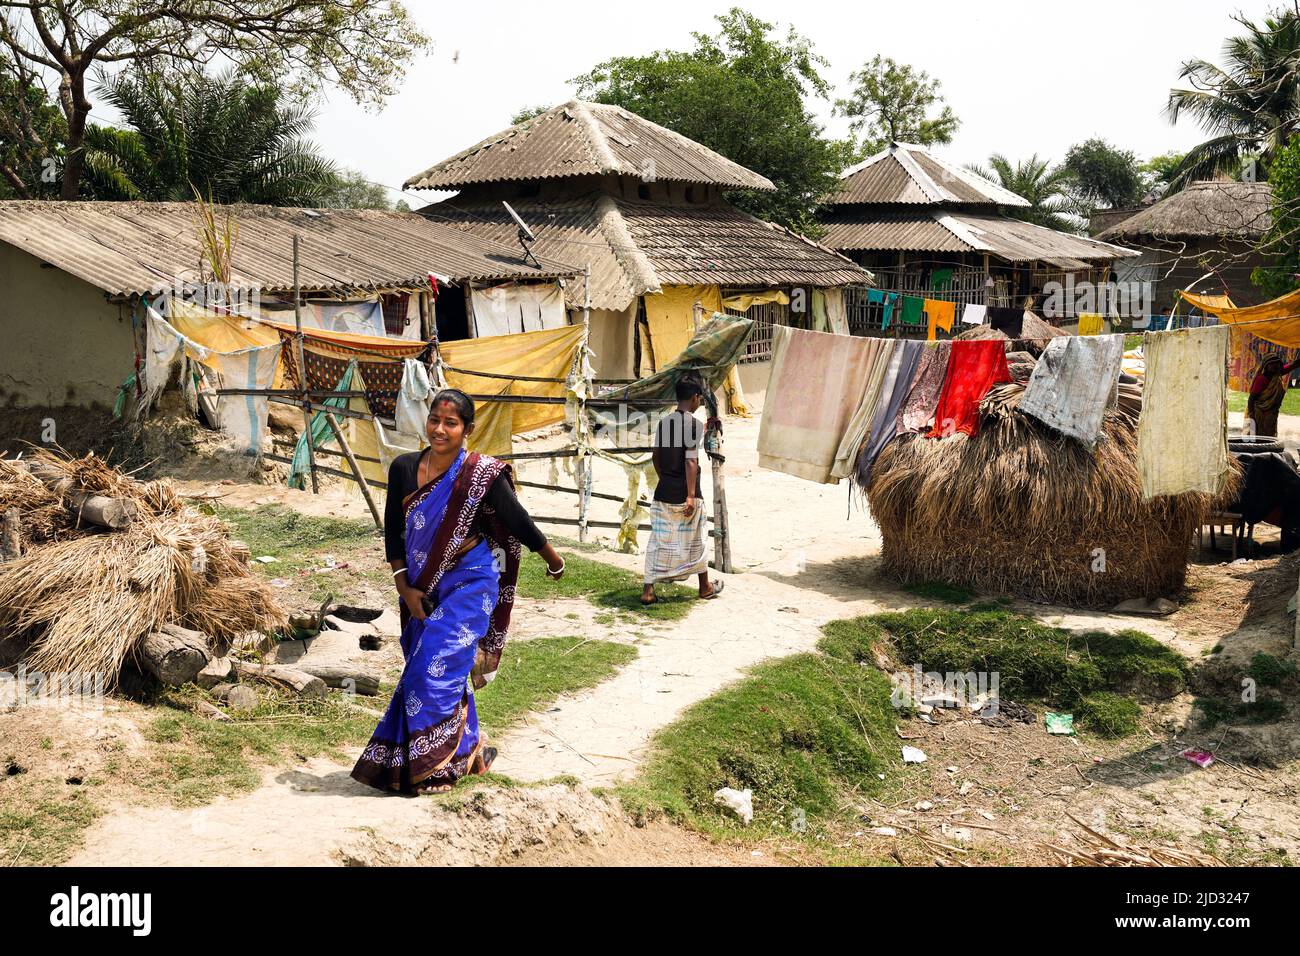 Scene of a Baluijhake/Dhosa village near Kolkata, India Stock Photo